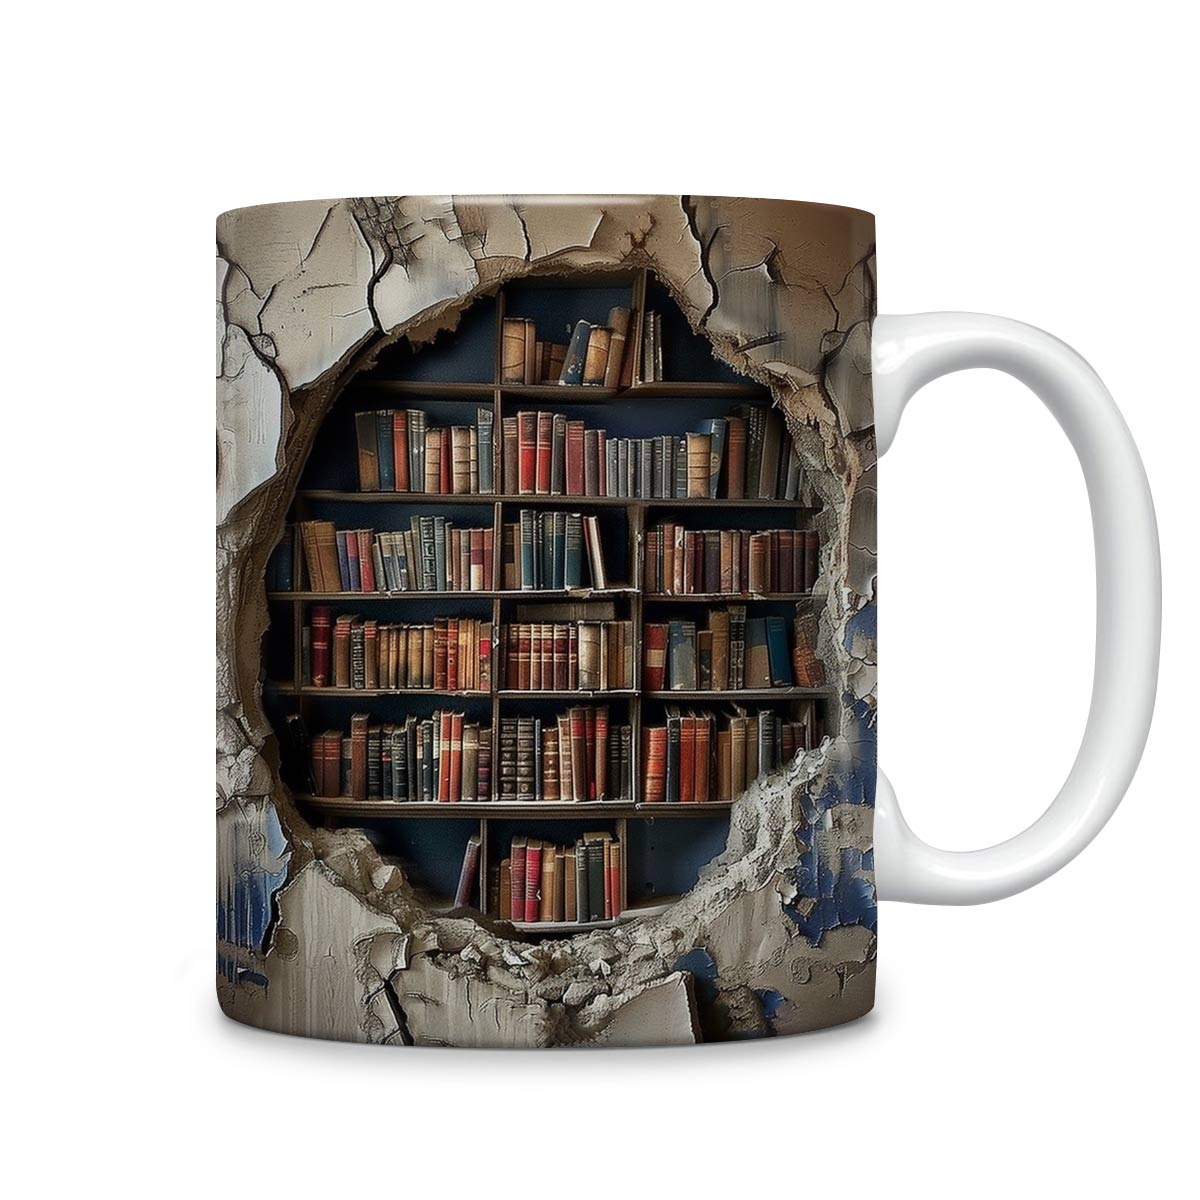 Printliant Ceramic Mug Secret Library